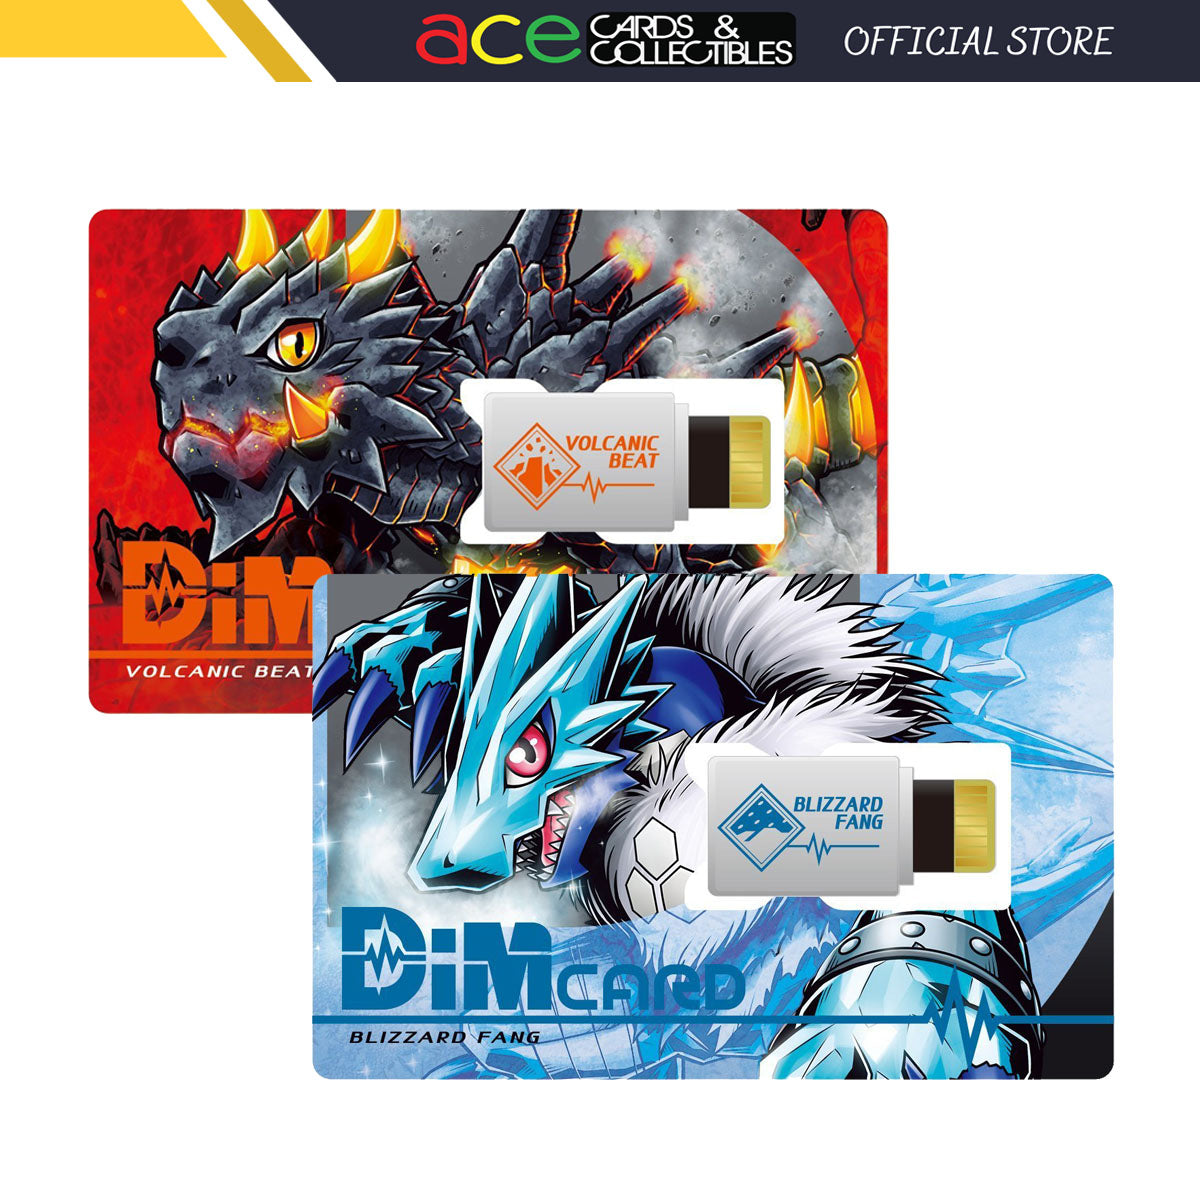 Digimon Vital Breath Digital Monster -Dim Card Set Vol.1 Volcanic Beat & Blizzard Fang-Bandai-Ace Cards & Collectibles